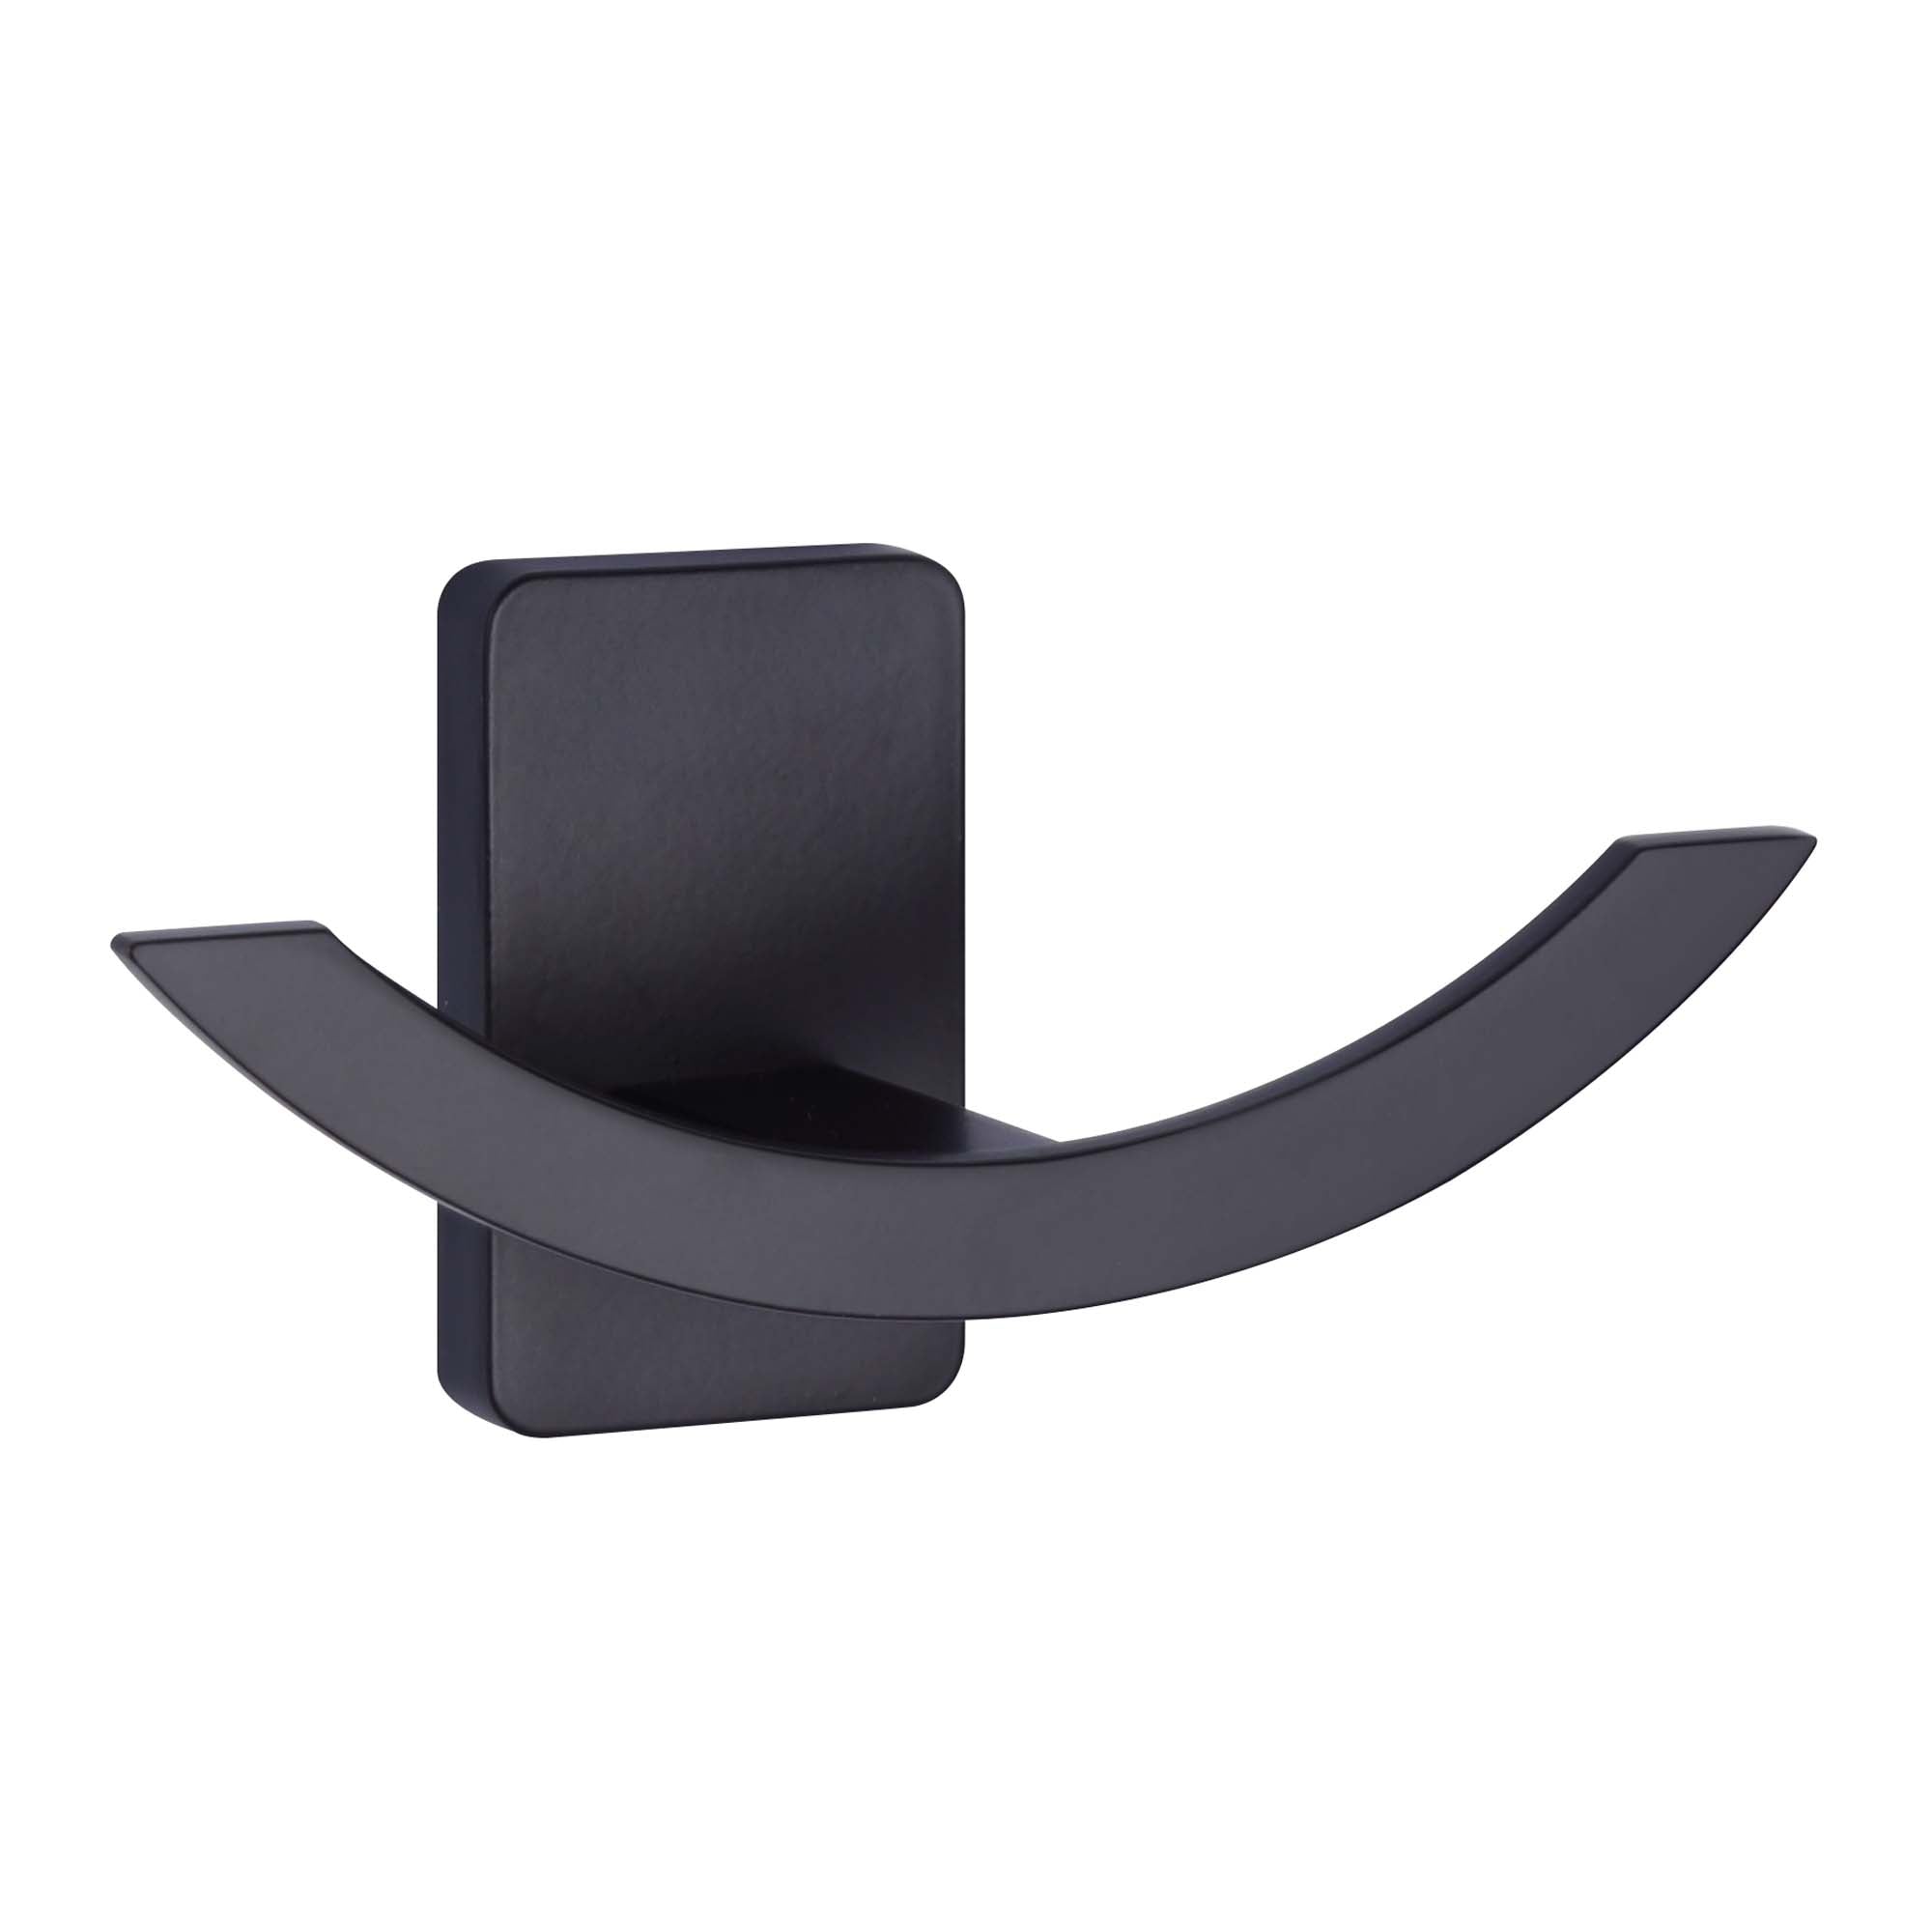 ARCHER Decorative accessory Black - BA106A03BK | CANARM